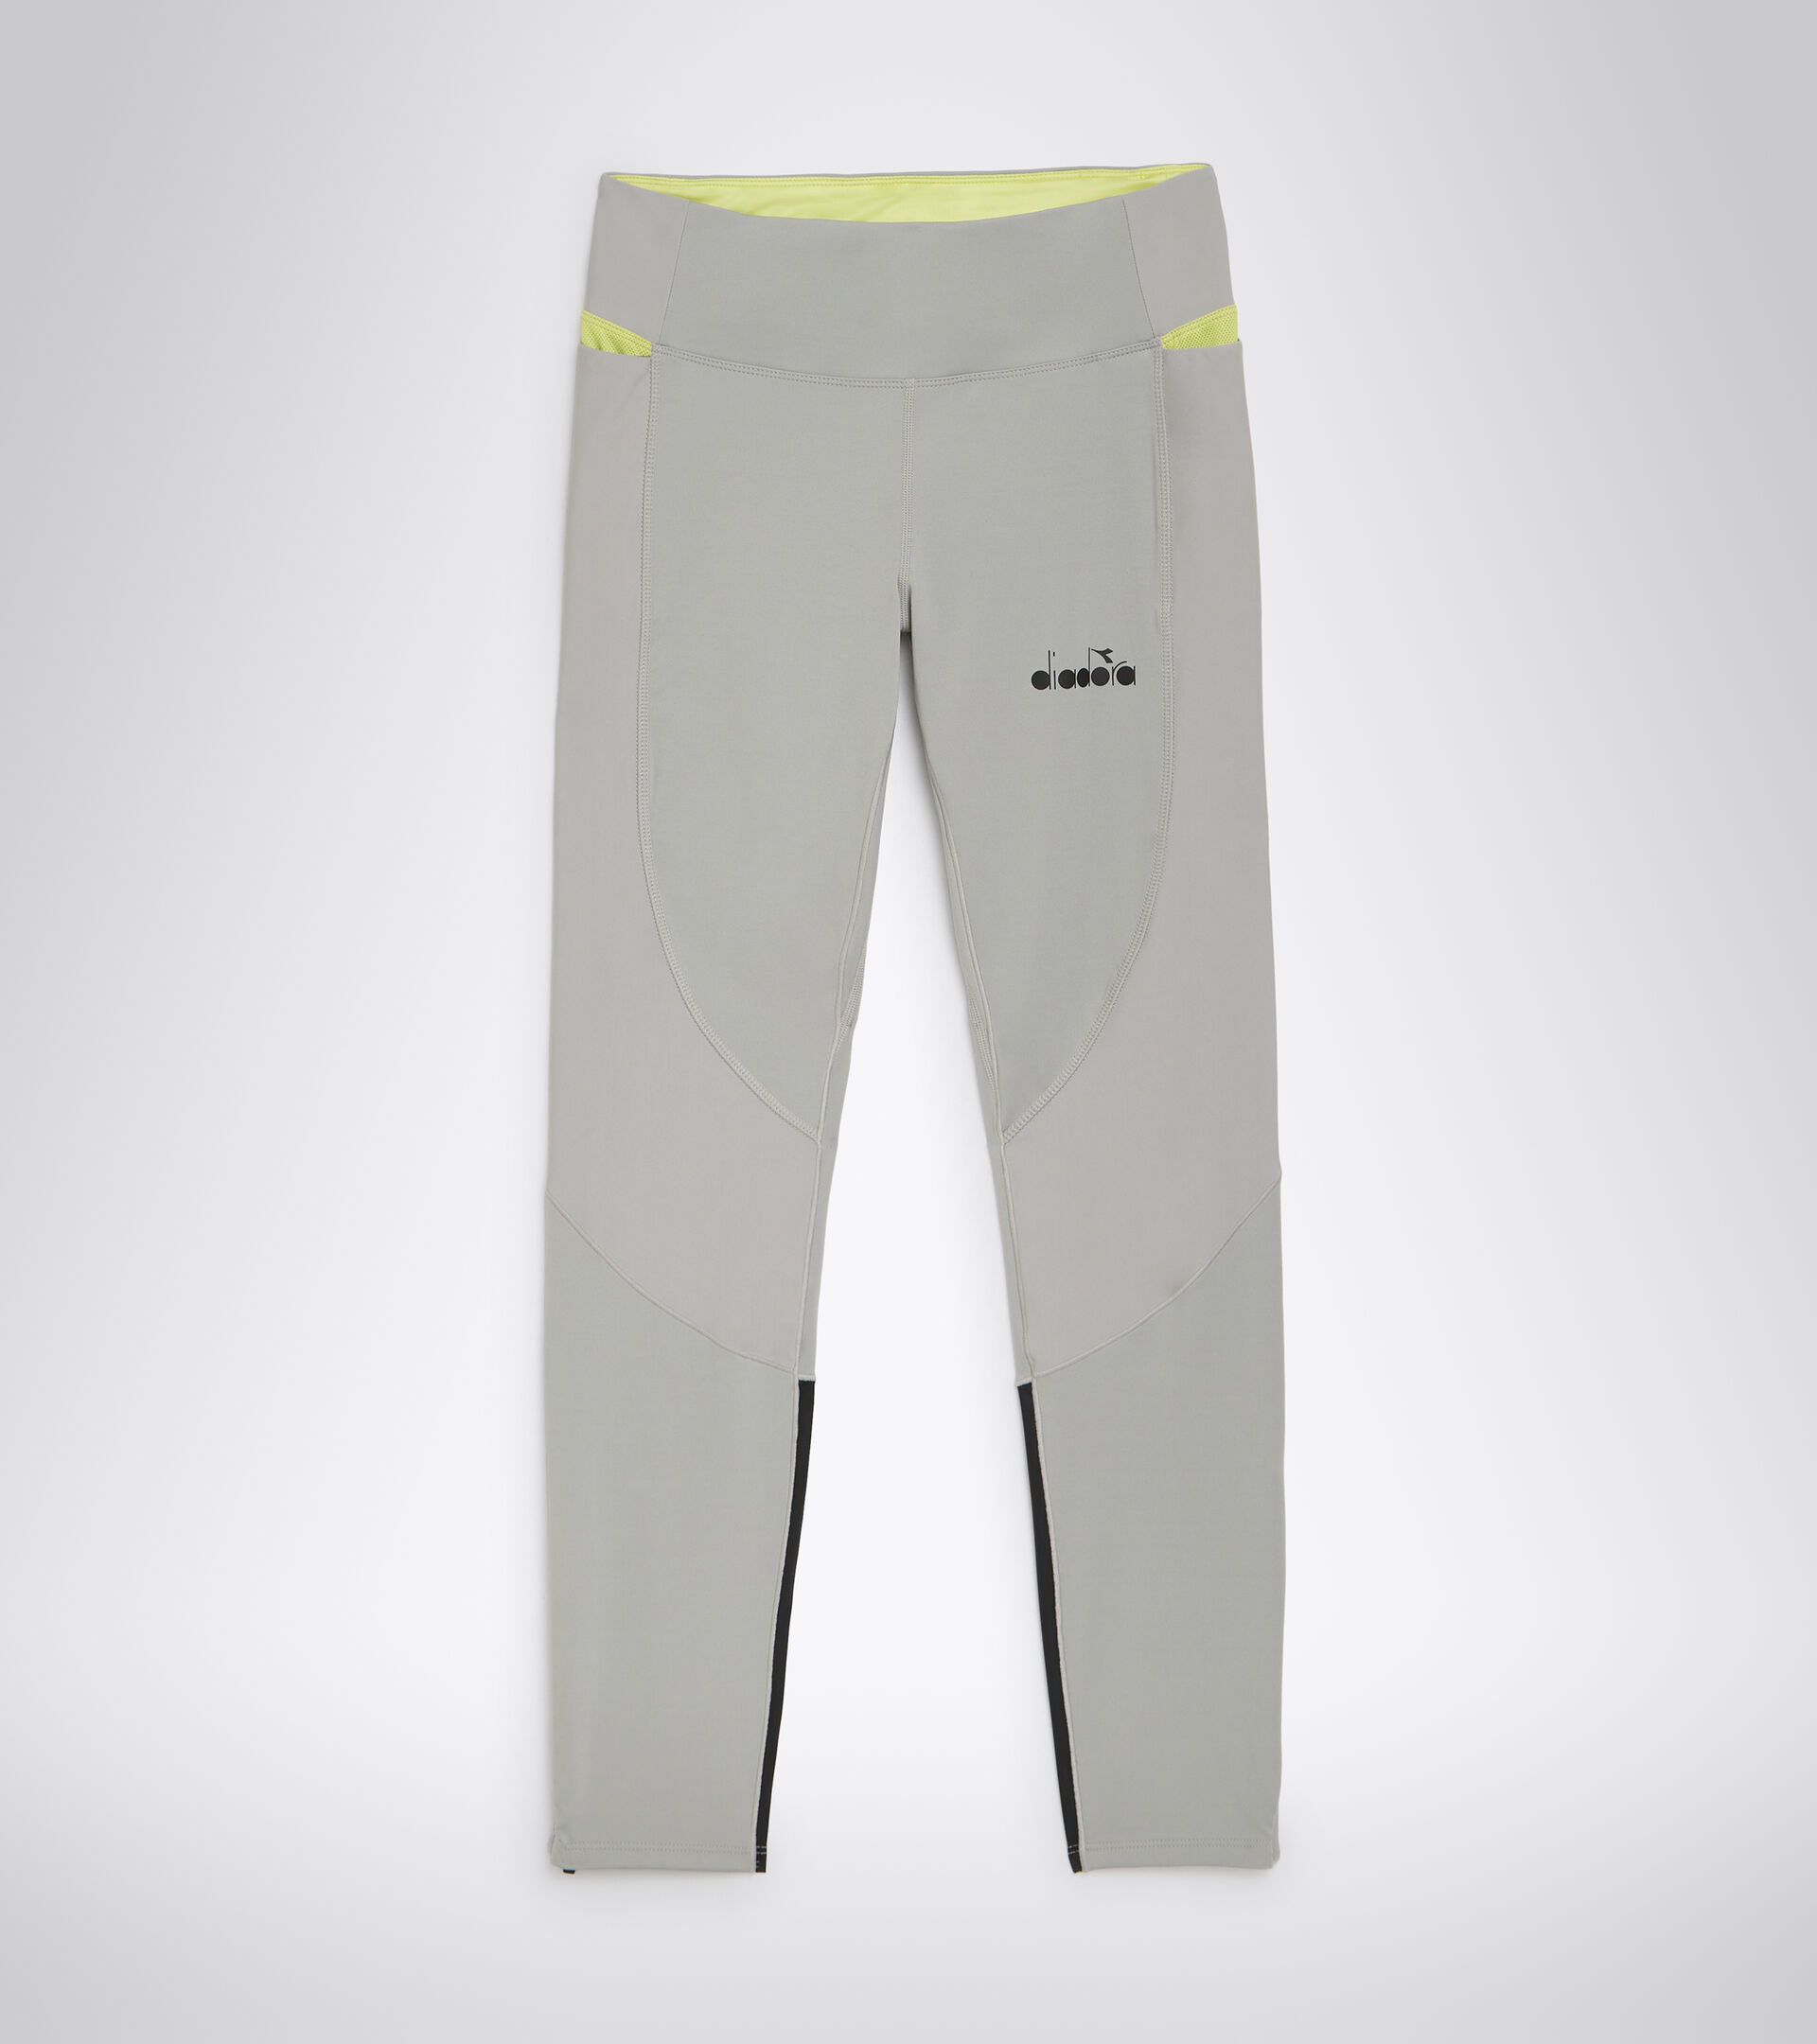 L.LEGGINGS CORE Sports leggings - Women - Diadora Online Store ID